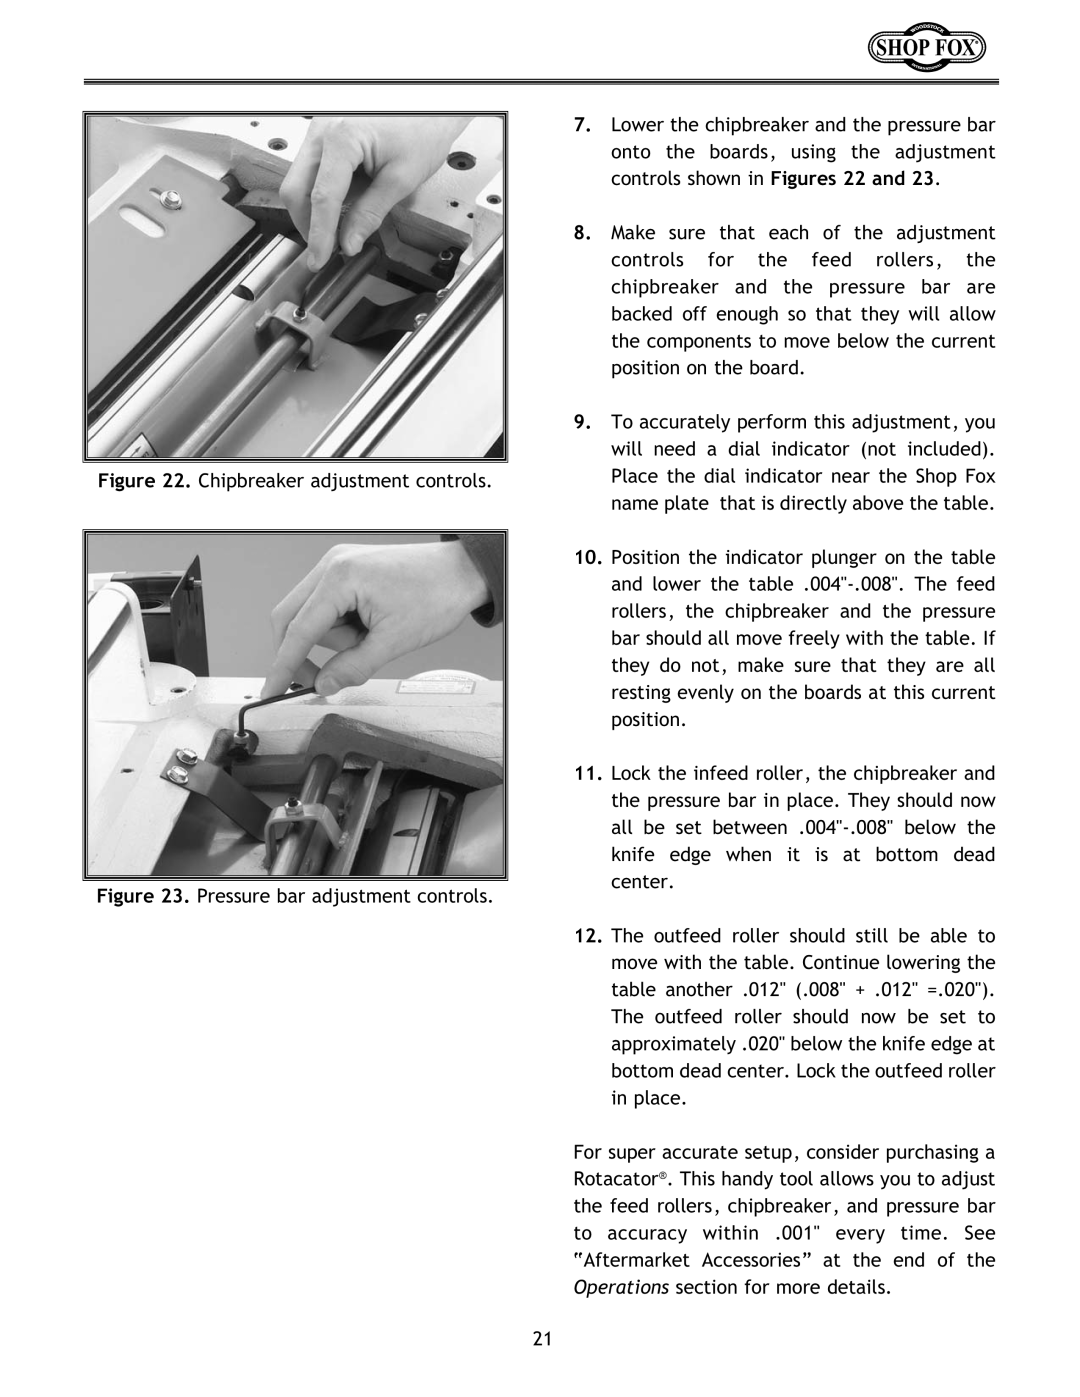 Woodstock W1683 instruction manual Chipbreaker adjustment controls, Pressure bar adjustment controls 